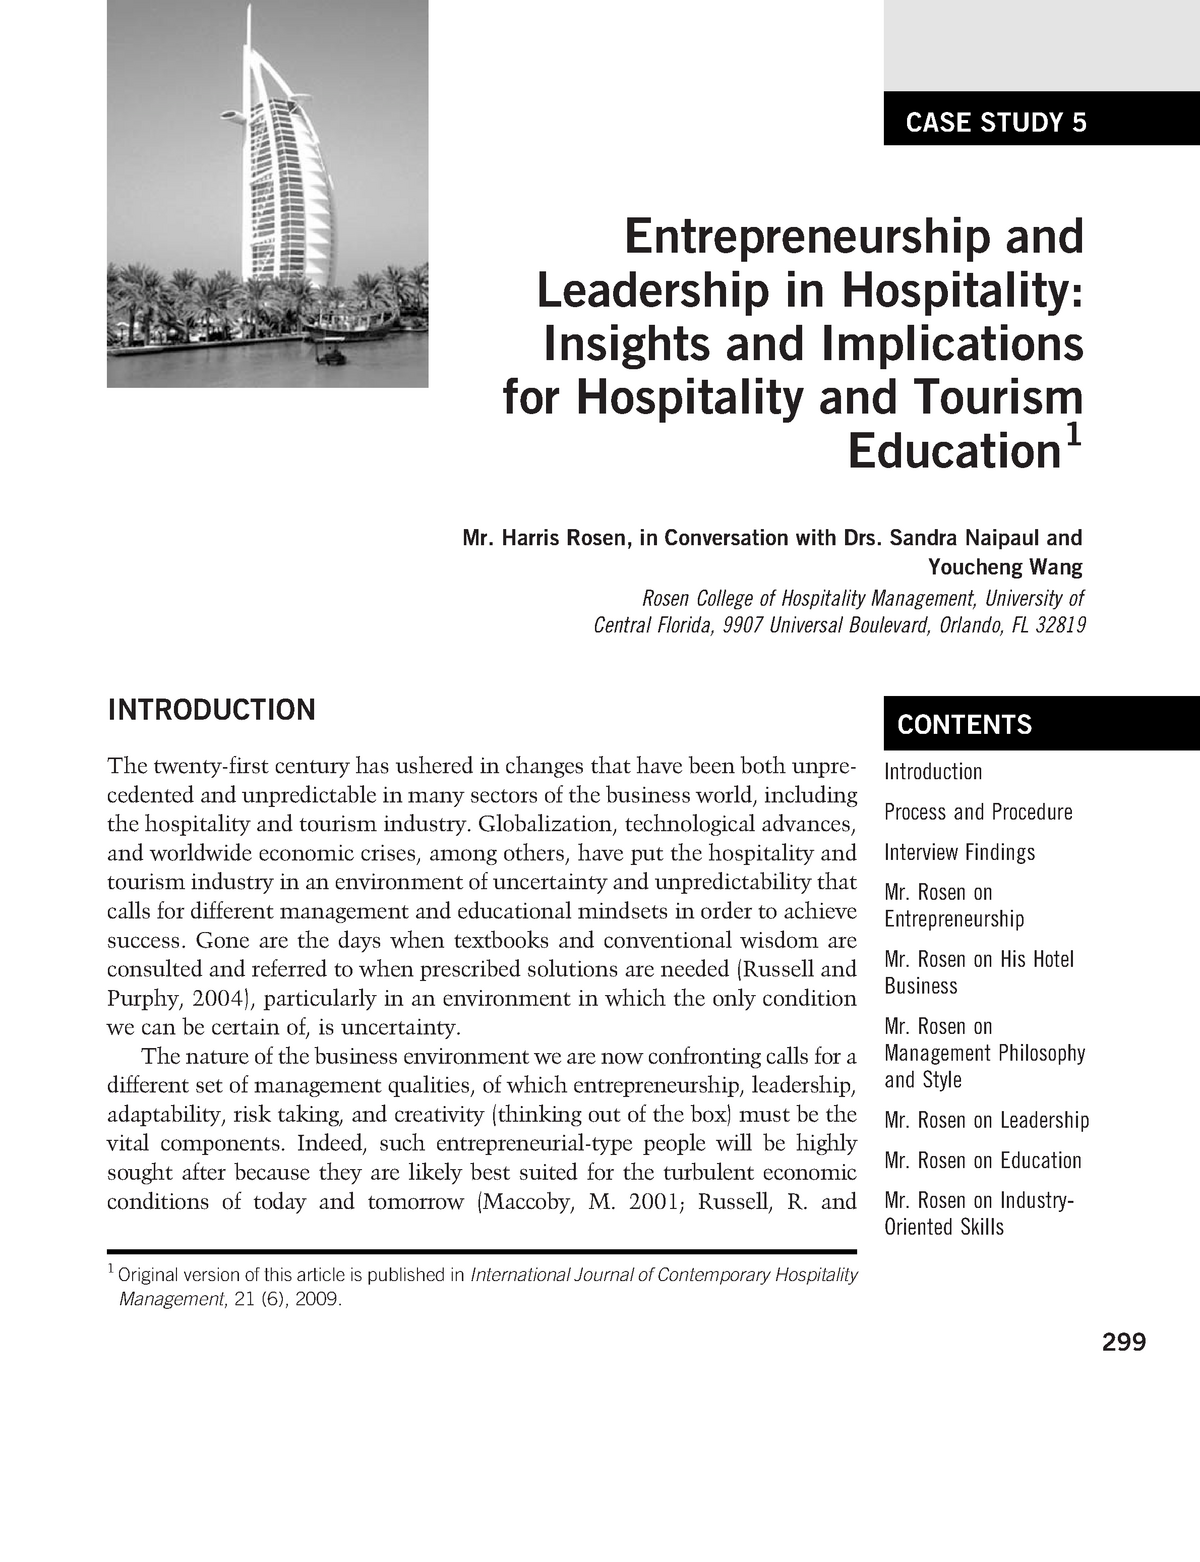 entrepreneurship case study for students pdf